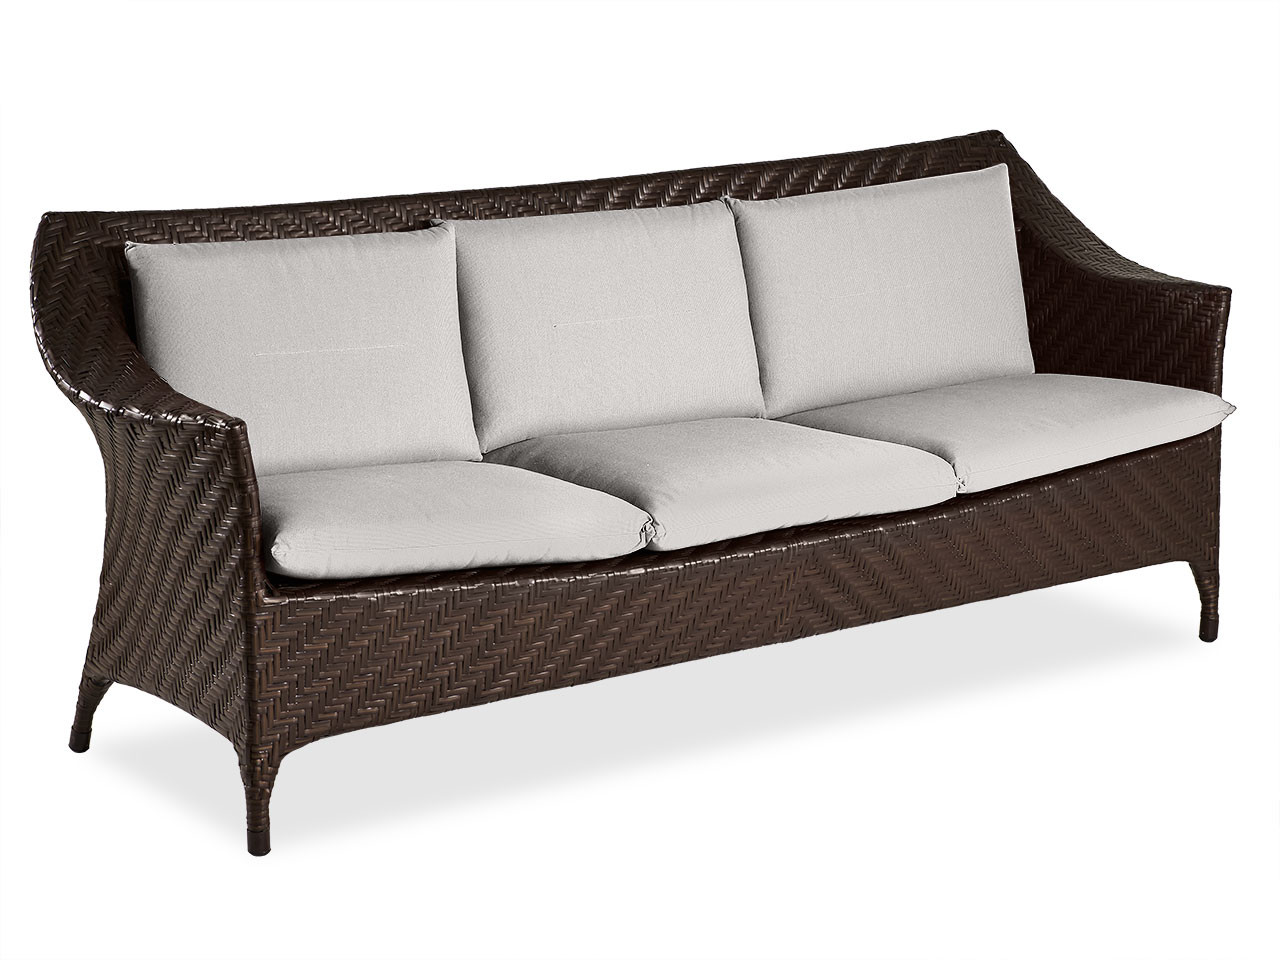 Martinique Java Brown Outdoor Herringbone Wicker and Cast Pumice Cushion Sofa